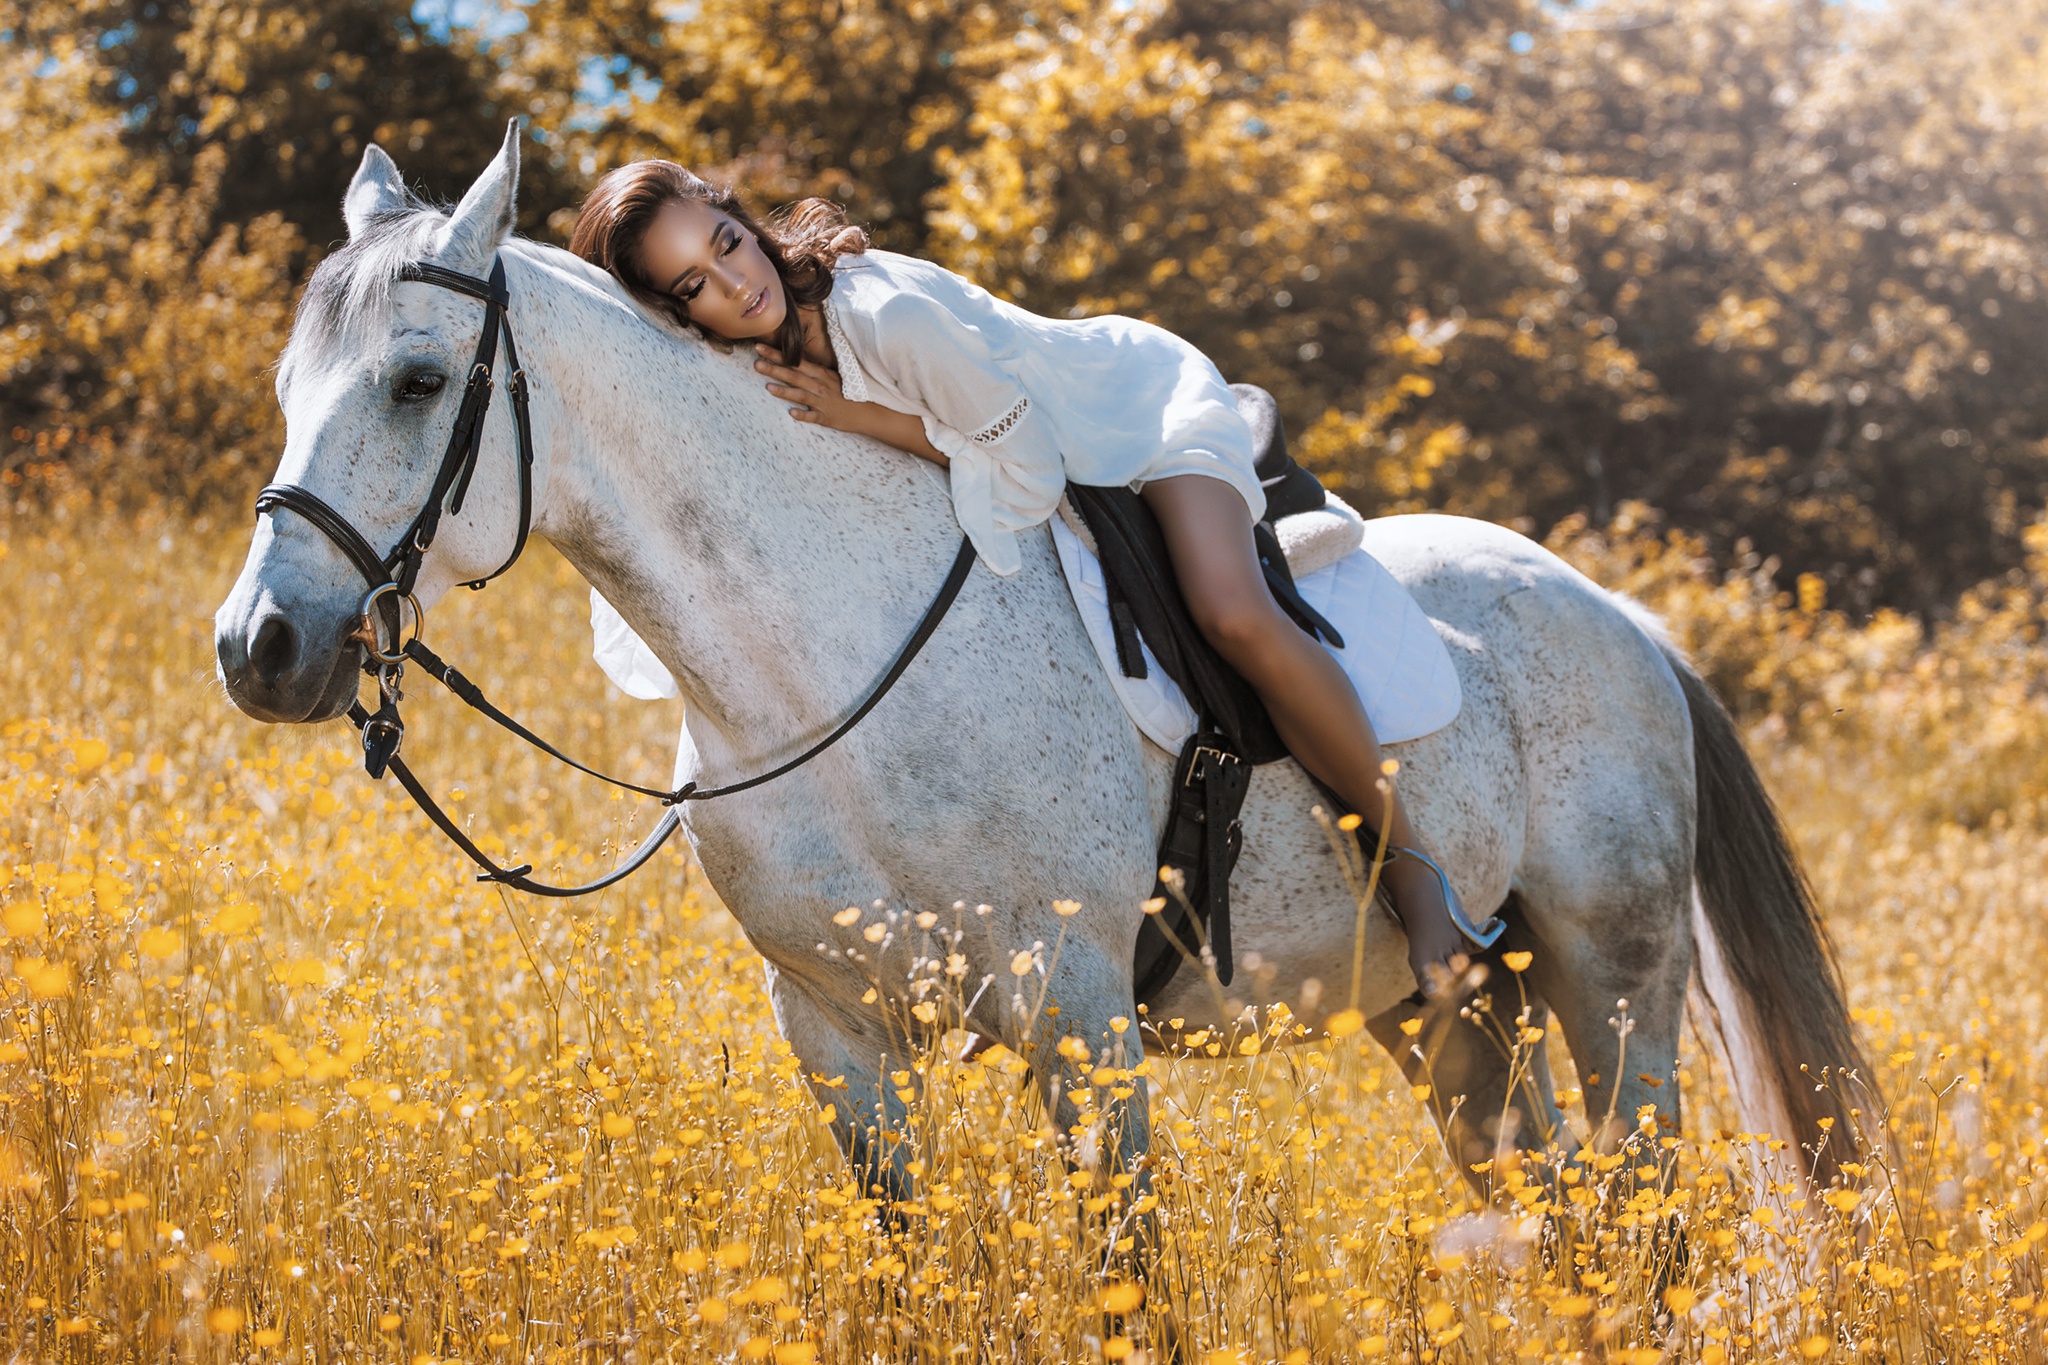 Девки и лошади. Девушка на коне. Фотосессия с лошадьми. Верхом на лошади. Красивая фотосессия с лошадью.